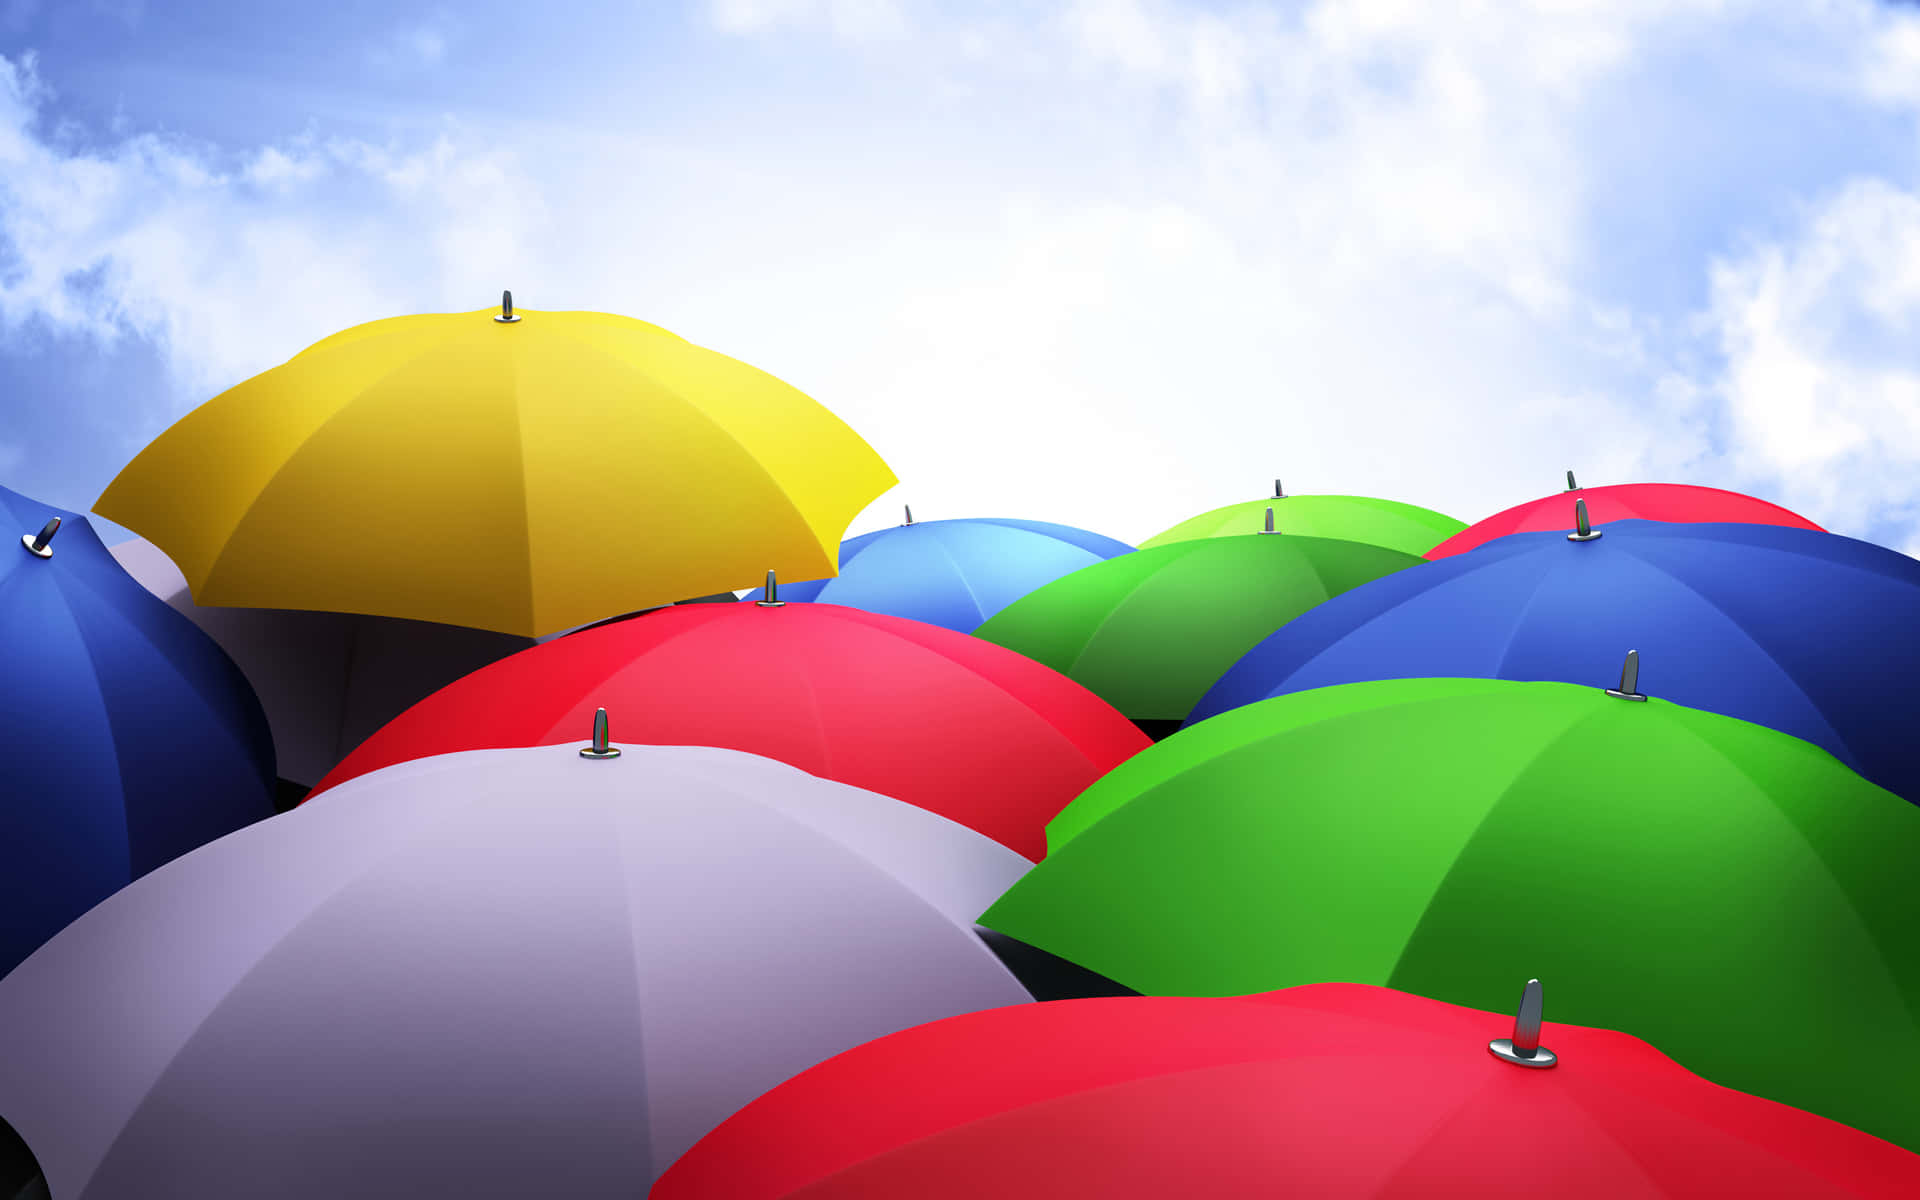 Colorful Umbrella Canopy Sky Background